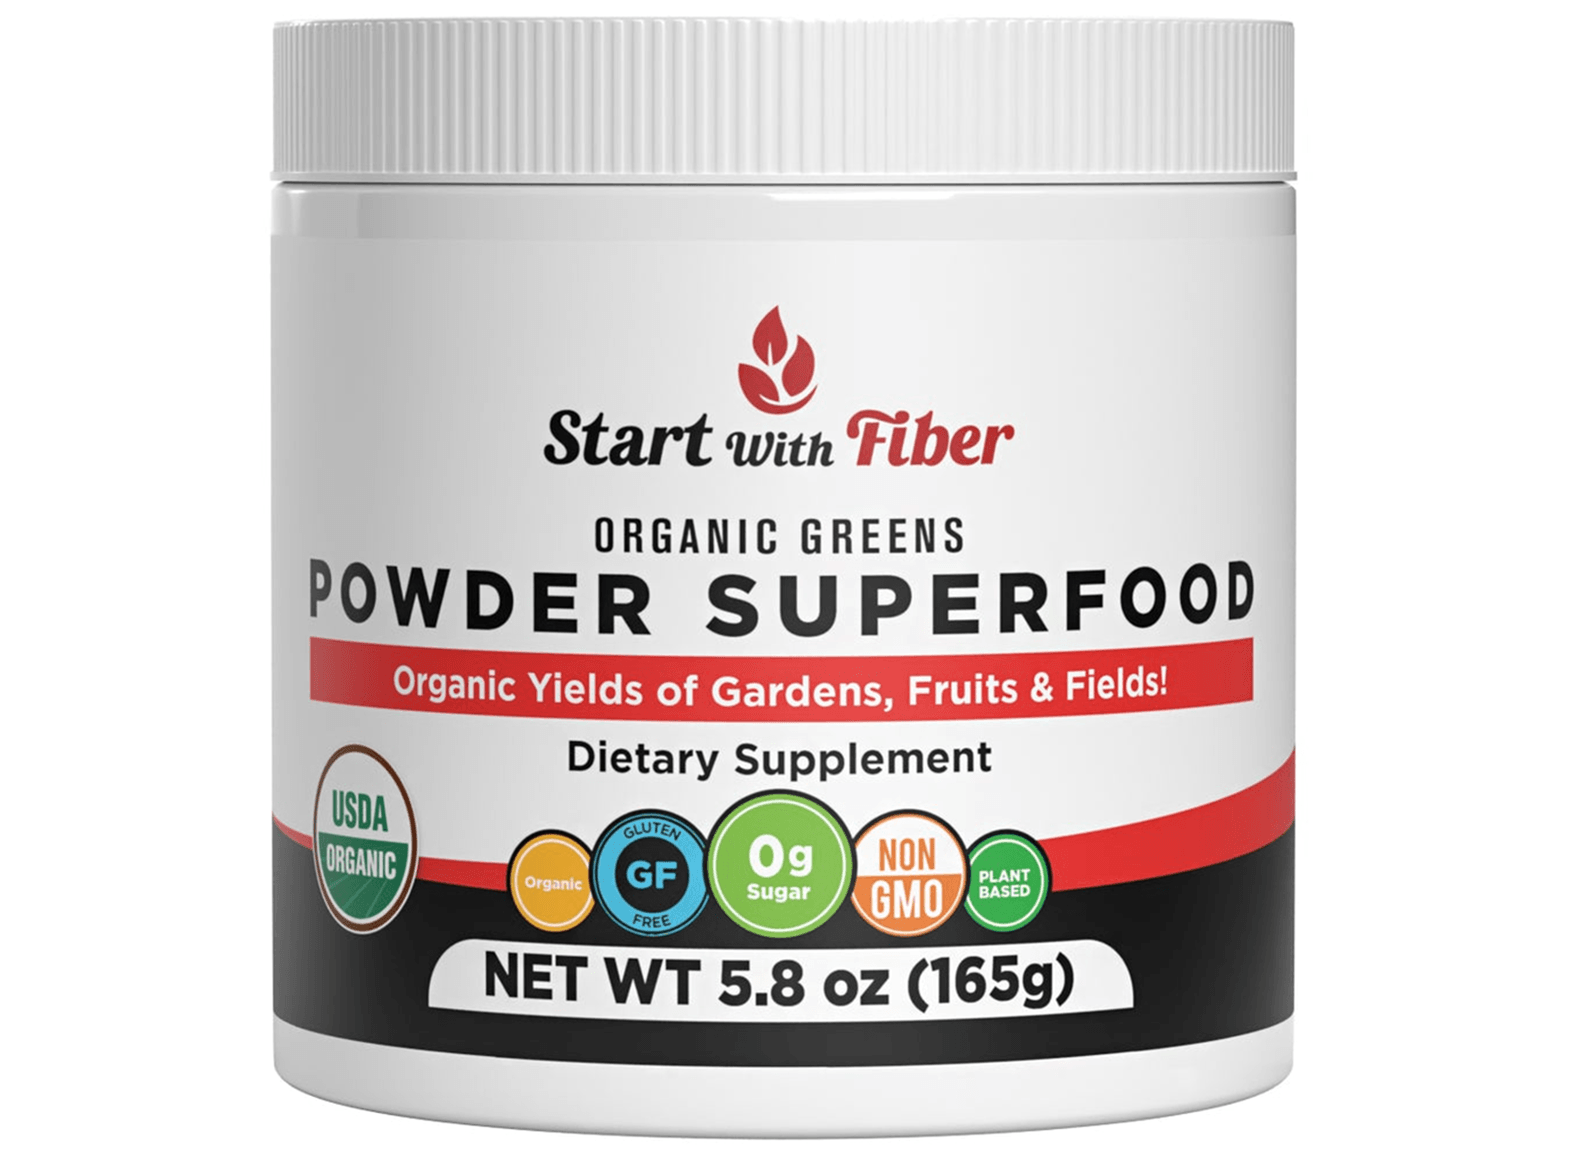 Organic Greens Powder Superfood - Start with Fiber